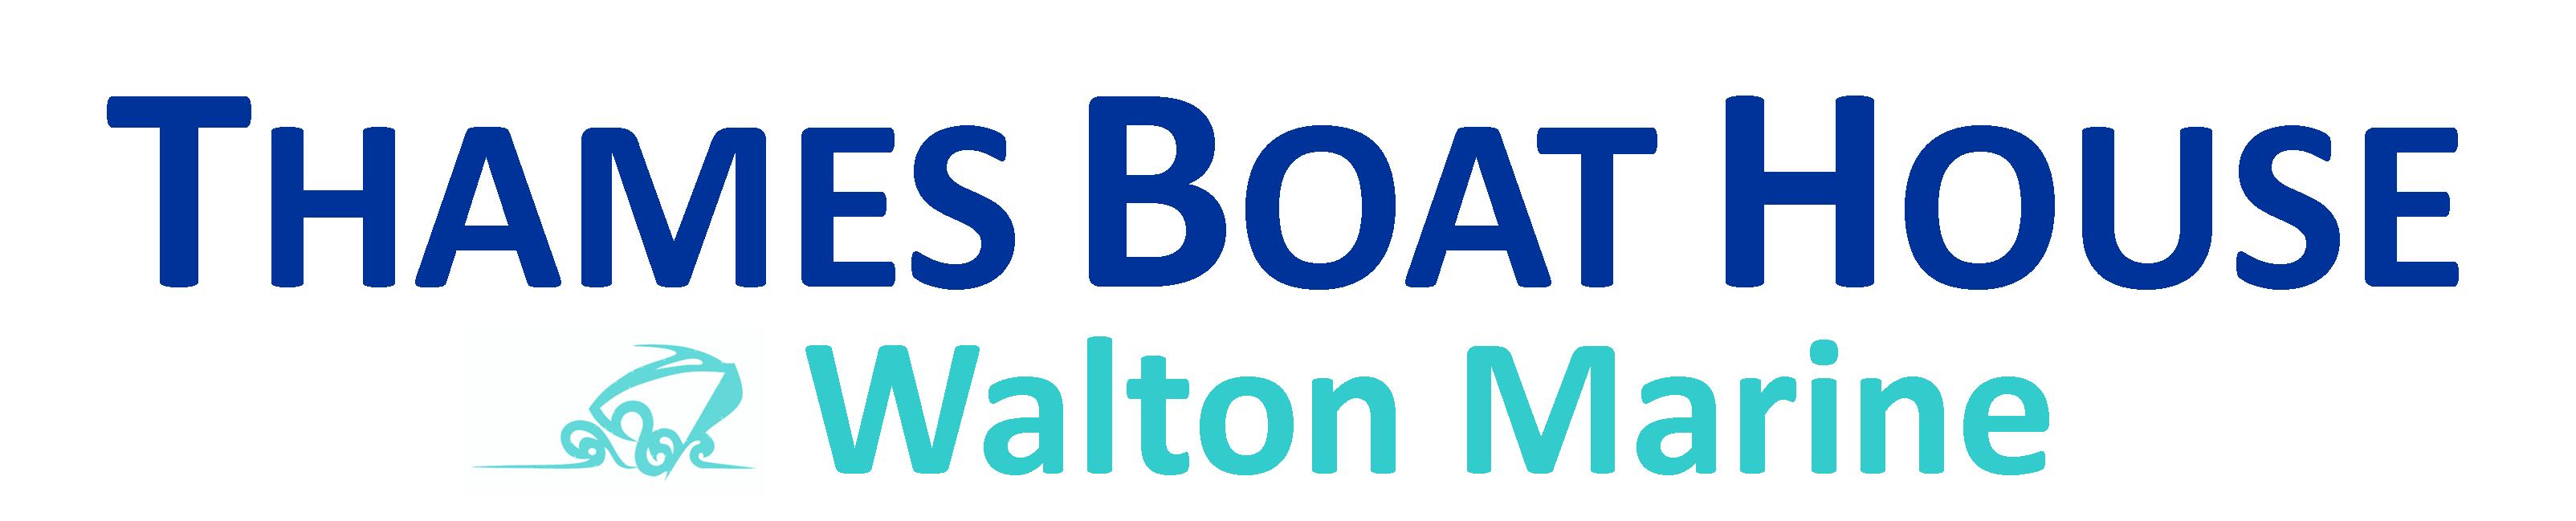 Thames Boat House (Walton Marine) - River Thames Boat Sales and Storage